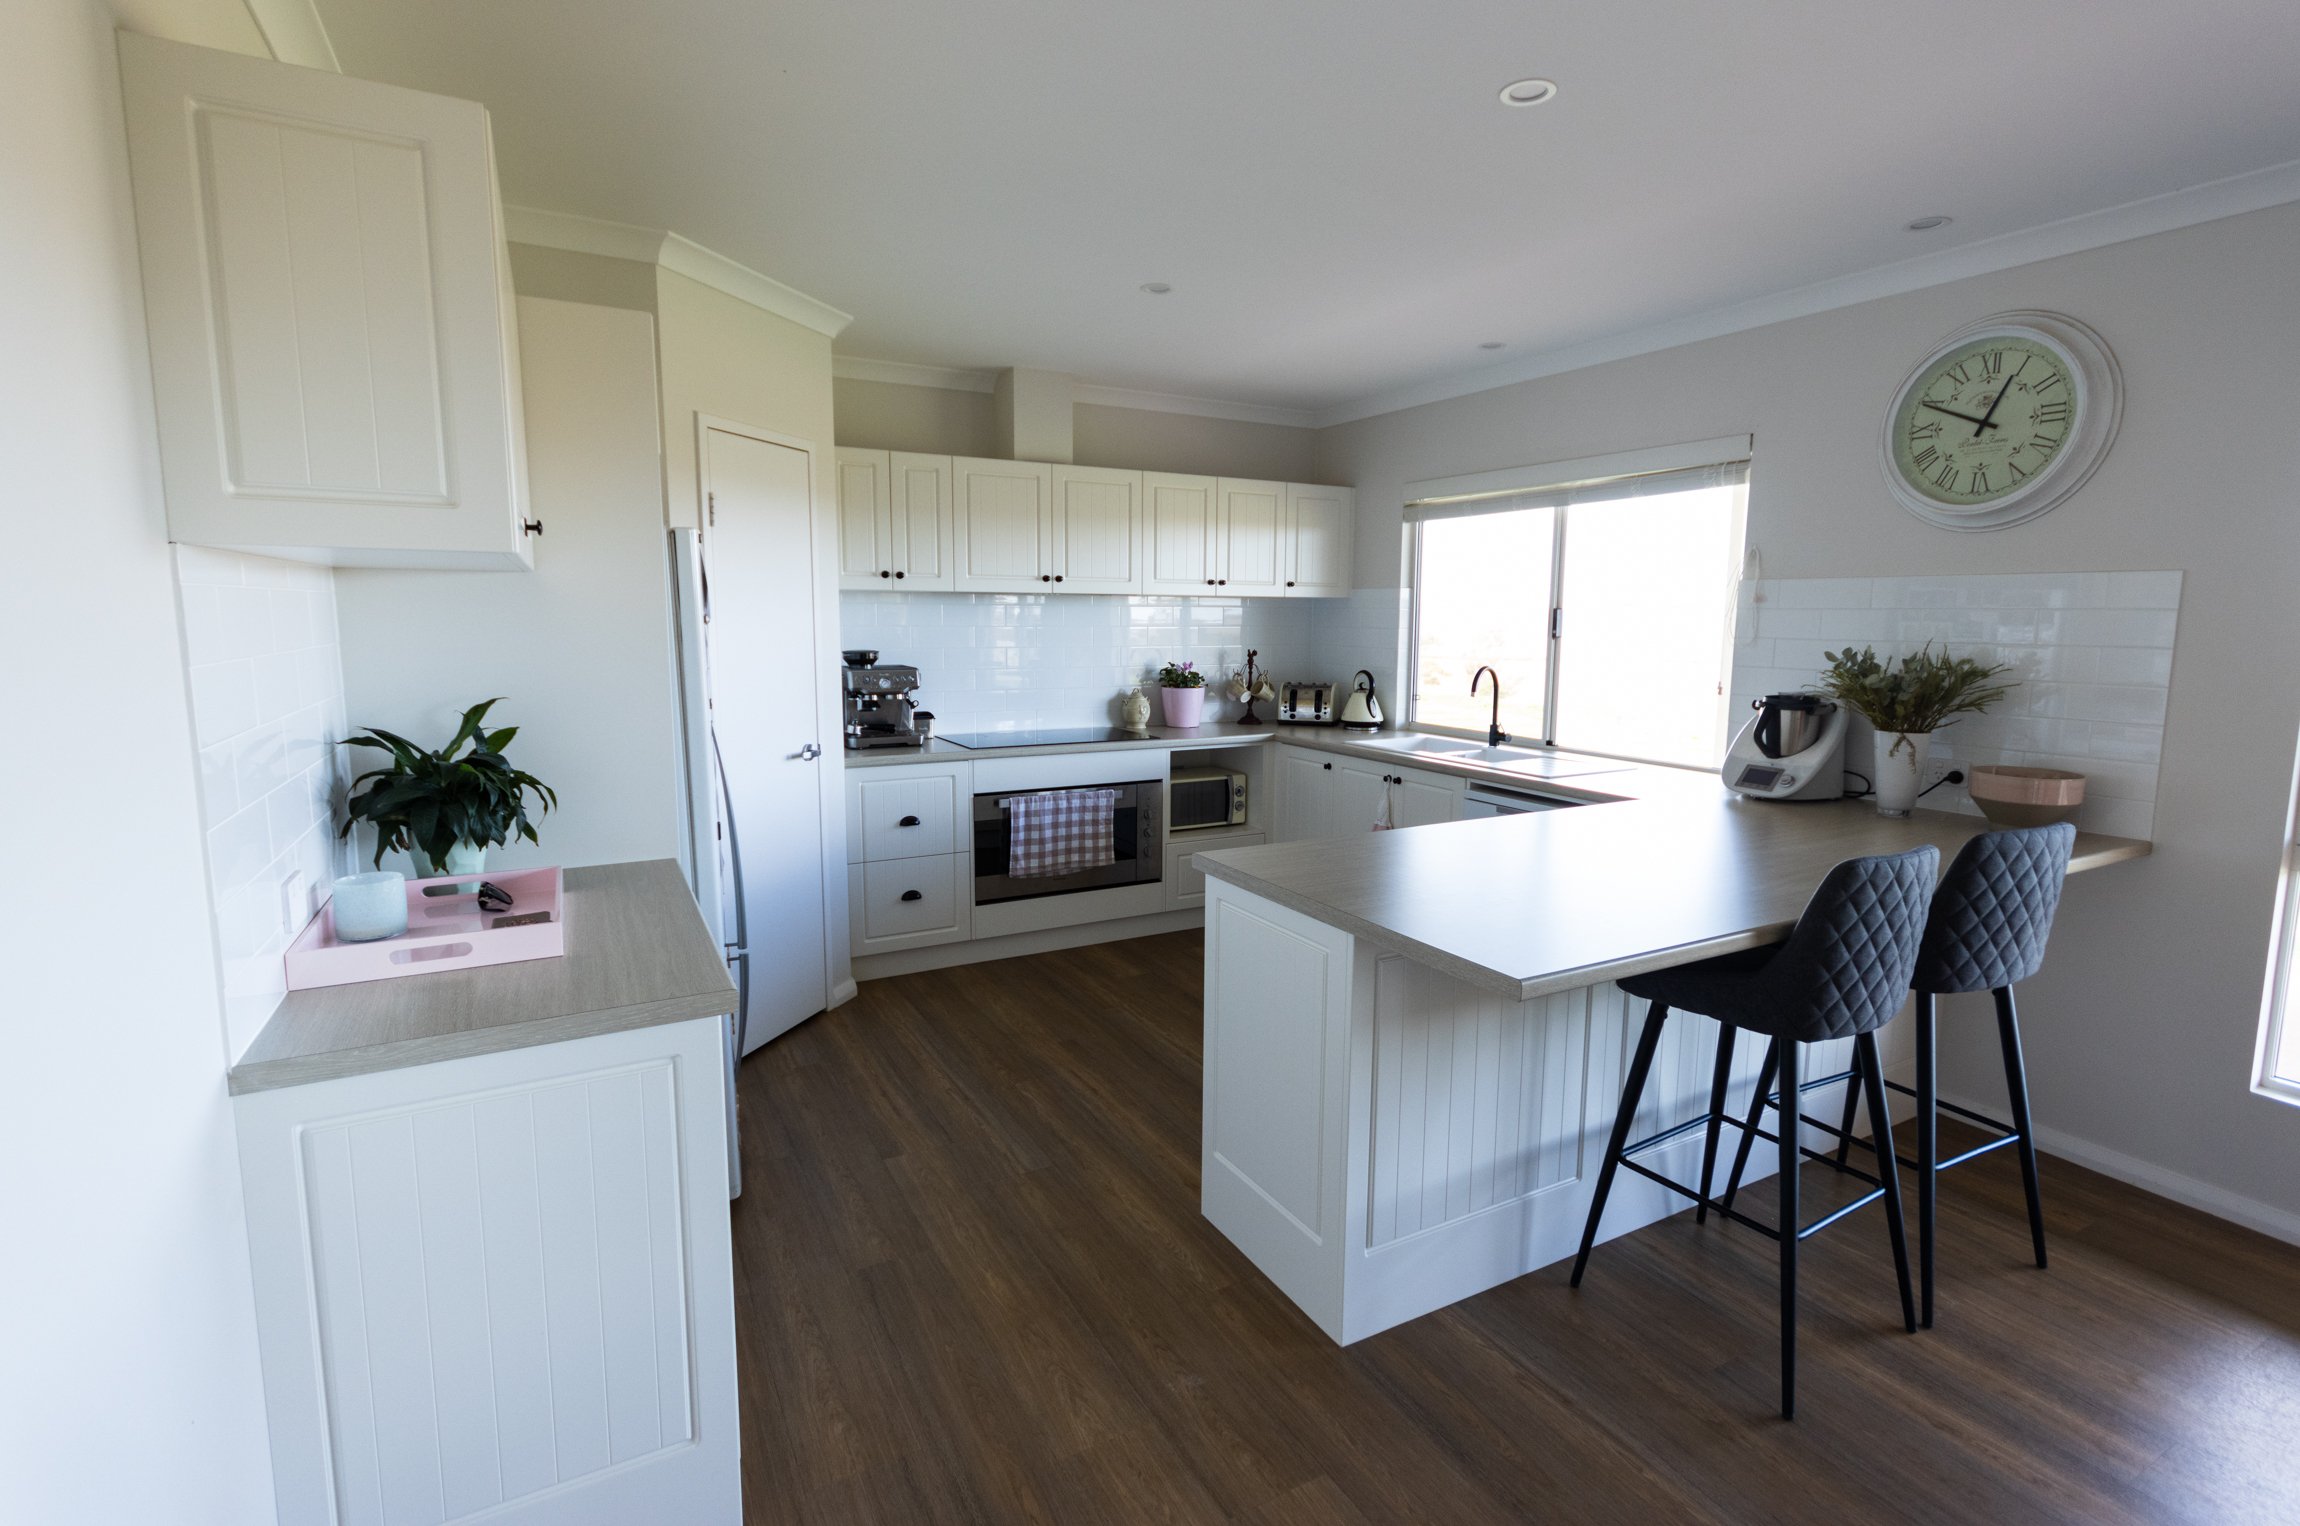 Modular home kitchen design